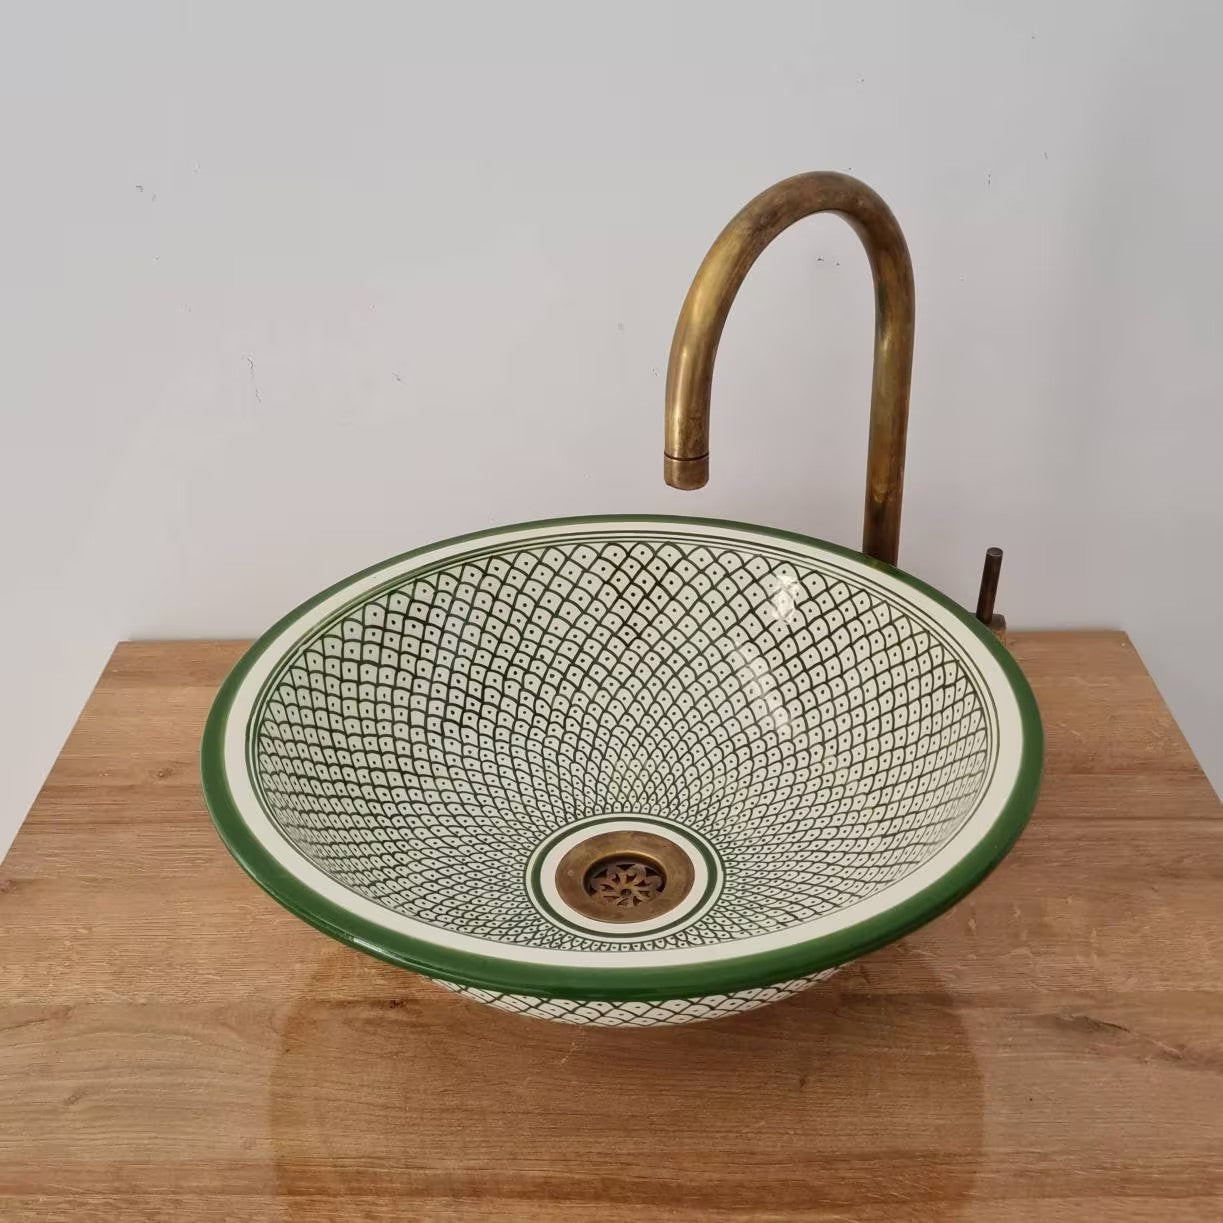 Moroccan sink | moroccan ceramic sink | bathroom sink | moroccan bathroom basin | cloakroom basin | Green sink #165